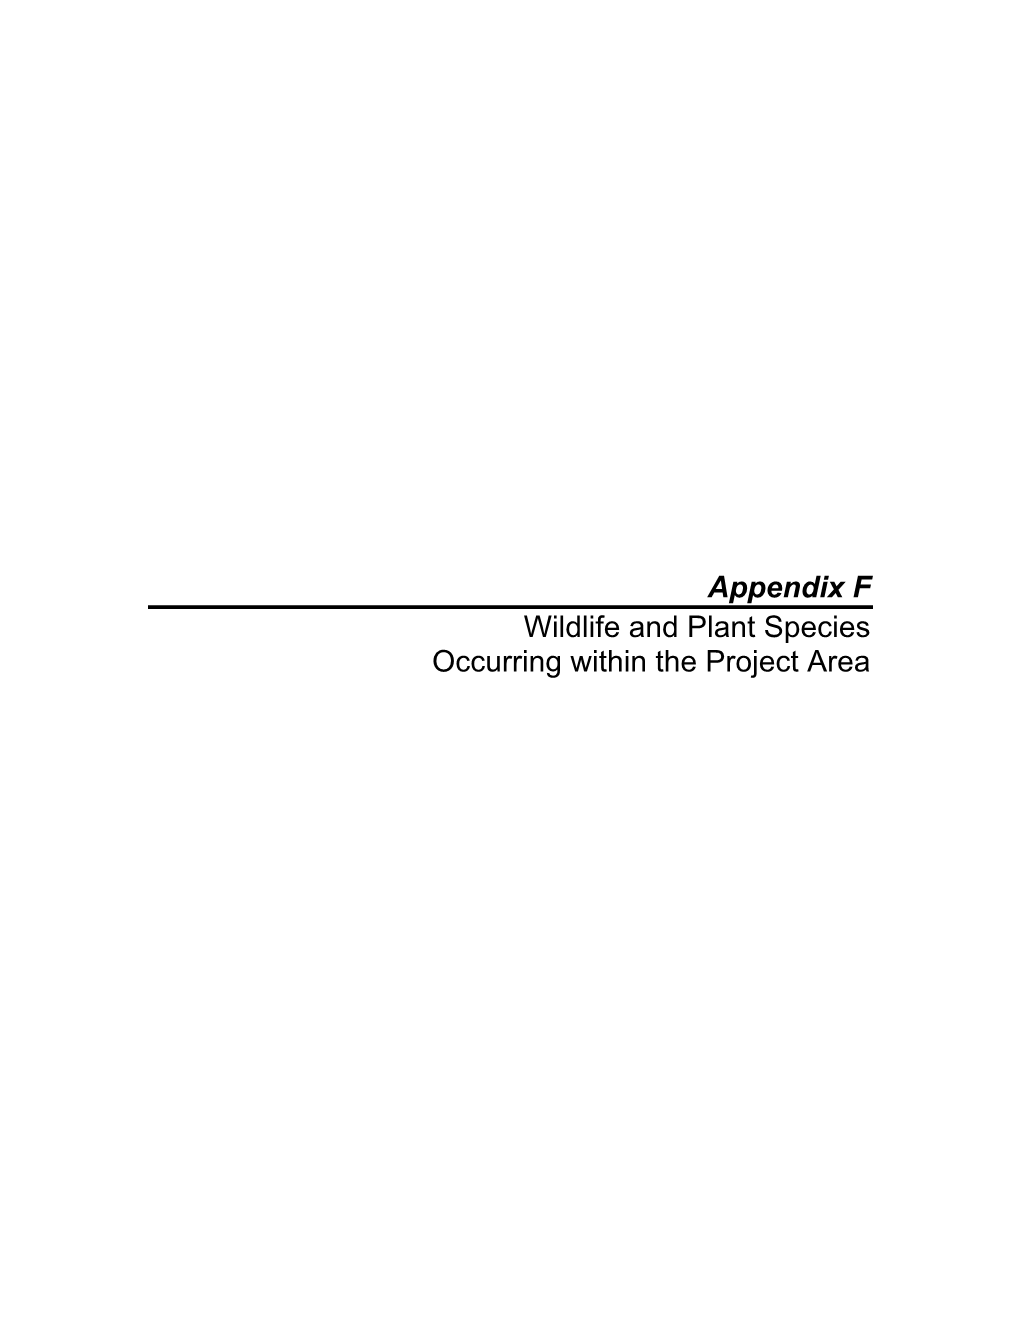 Final Environmental Impact Statement Volume II-Appendices